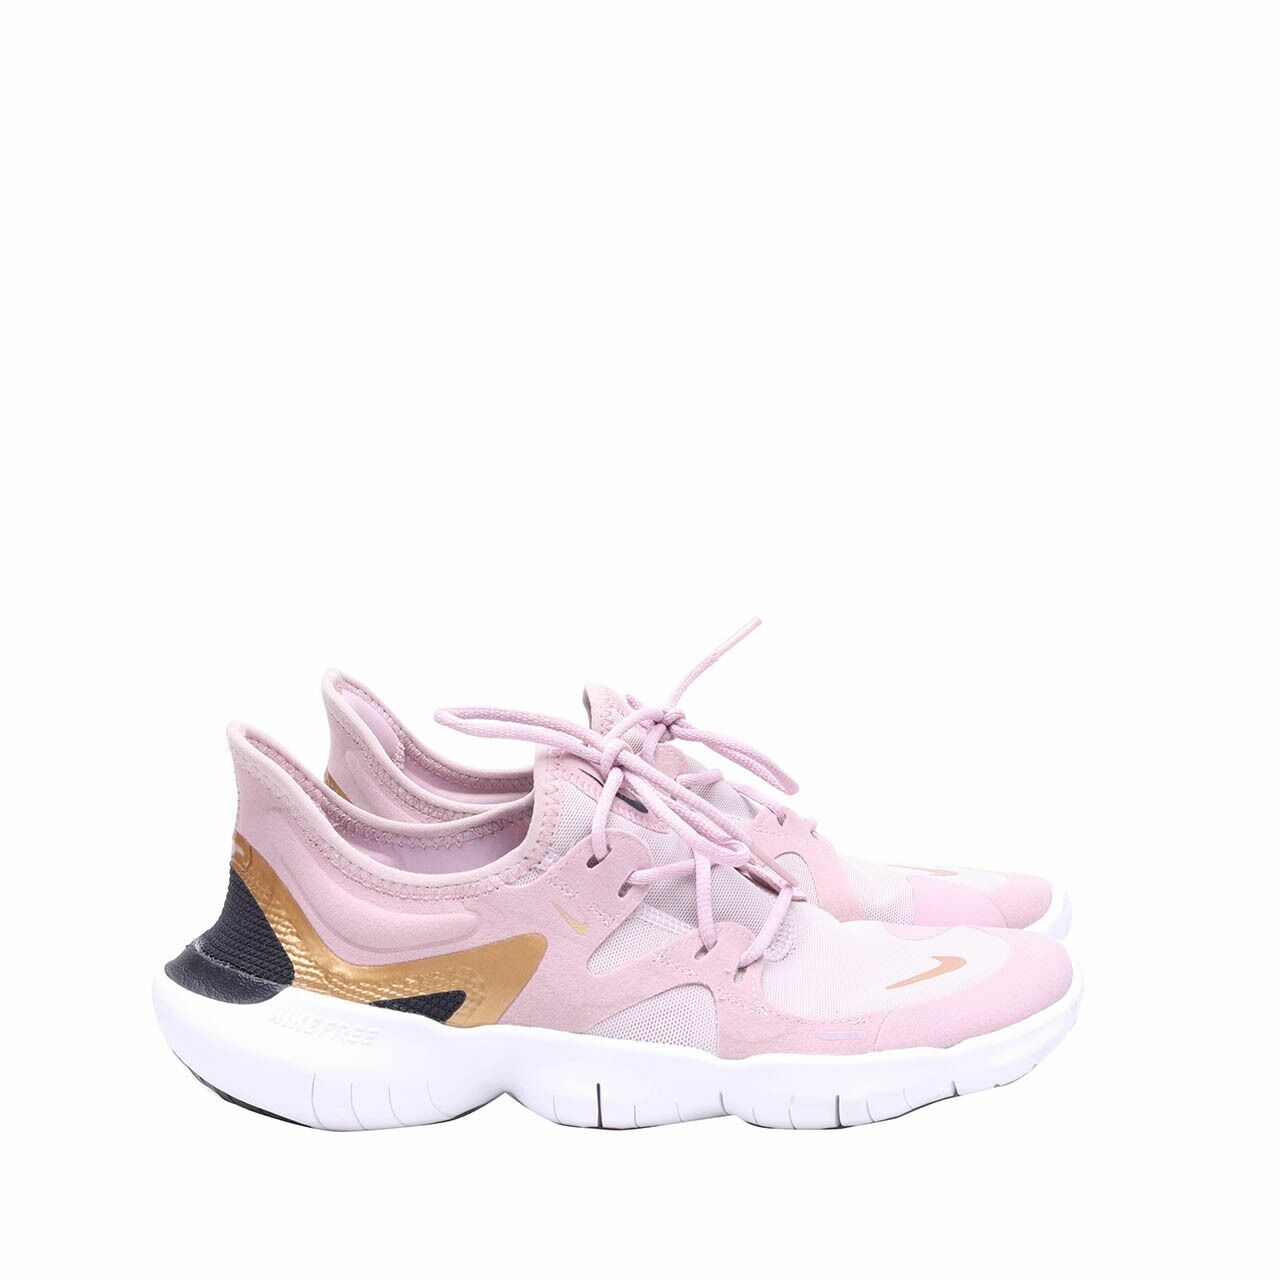 Nike Free RN 5.0 Women's Running Shoe Pink Sneakers